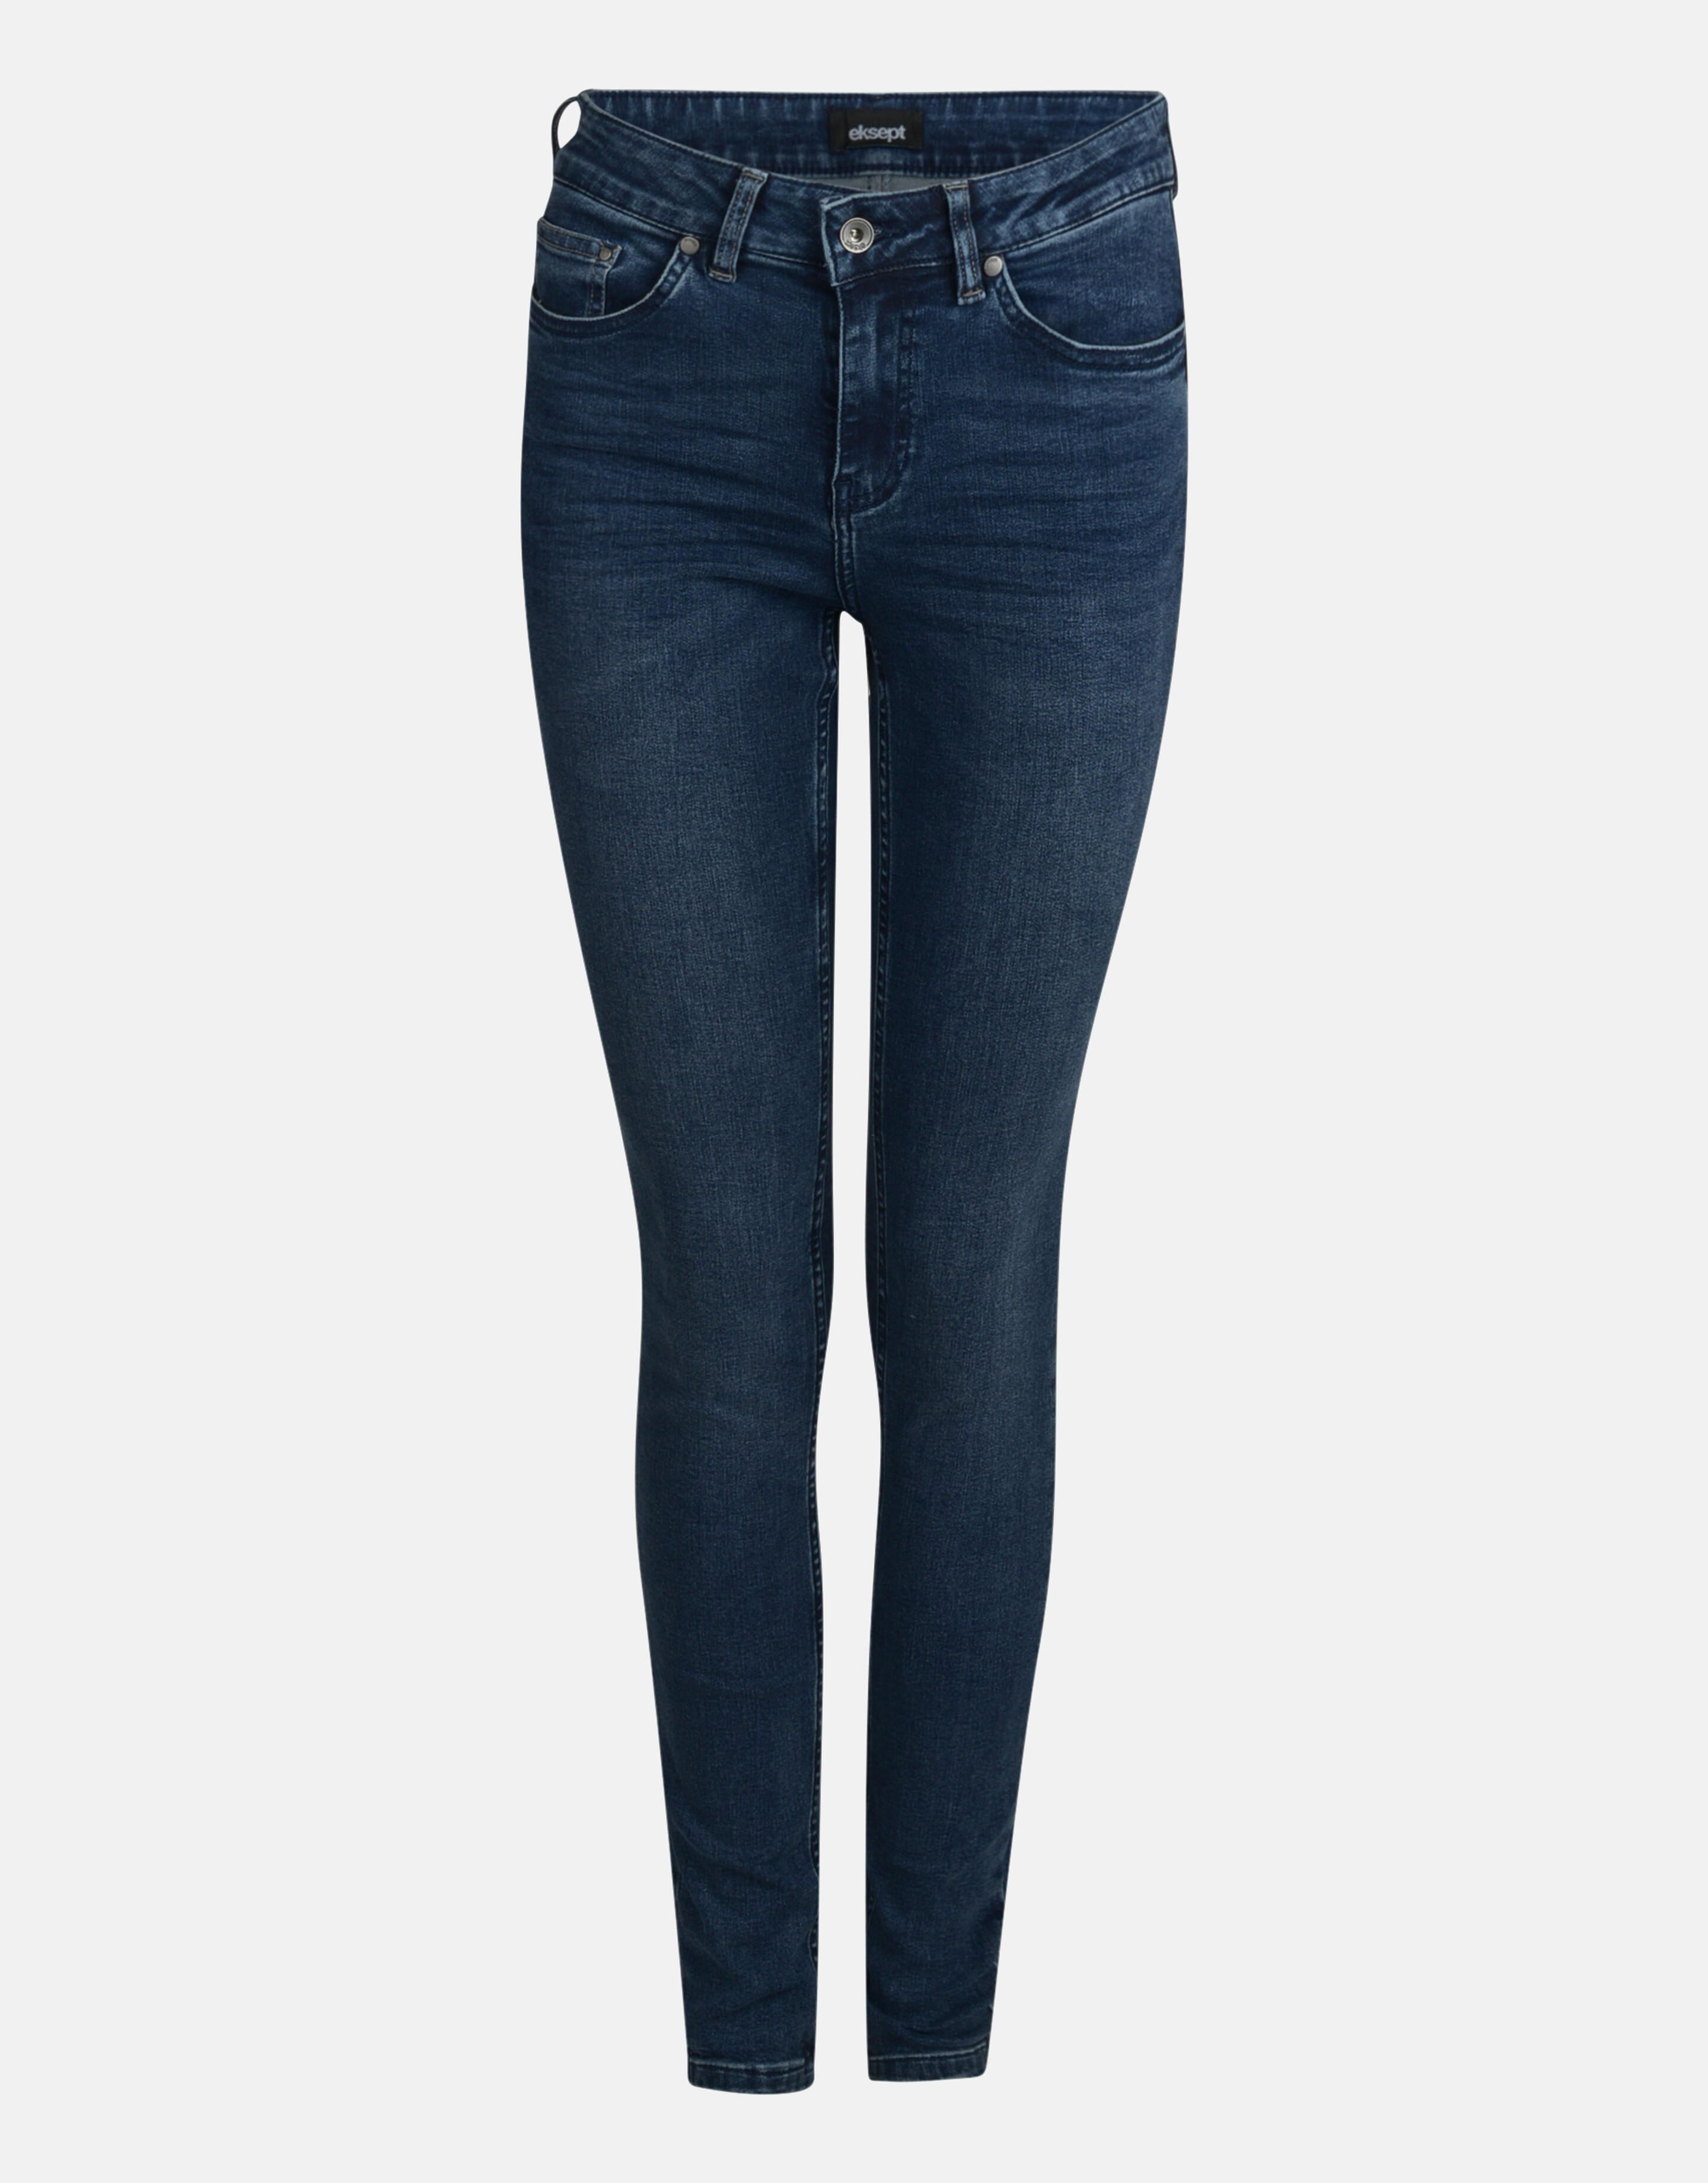 Skinny Jeans Middenblauw L34 Eksept